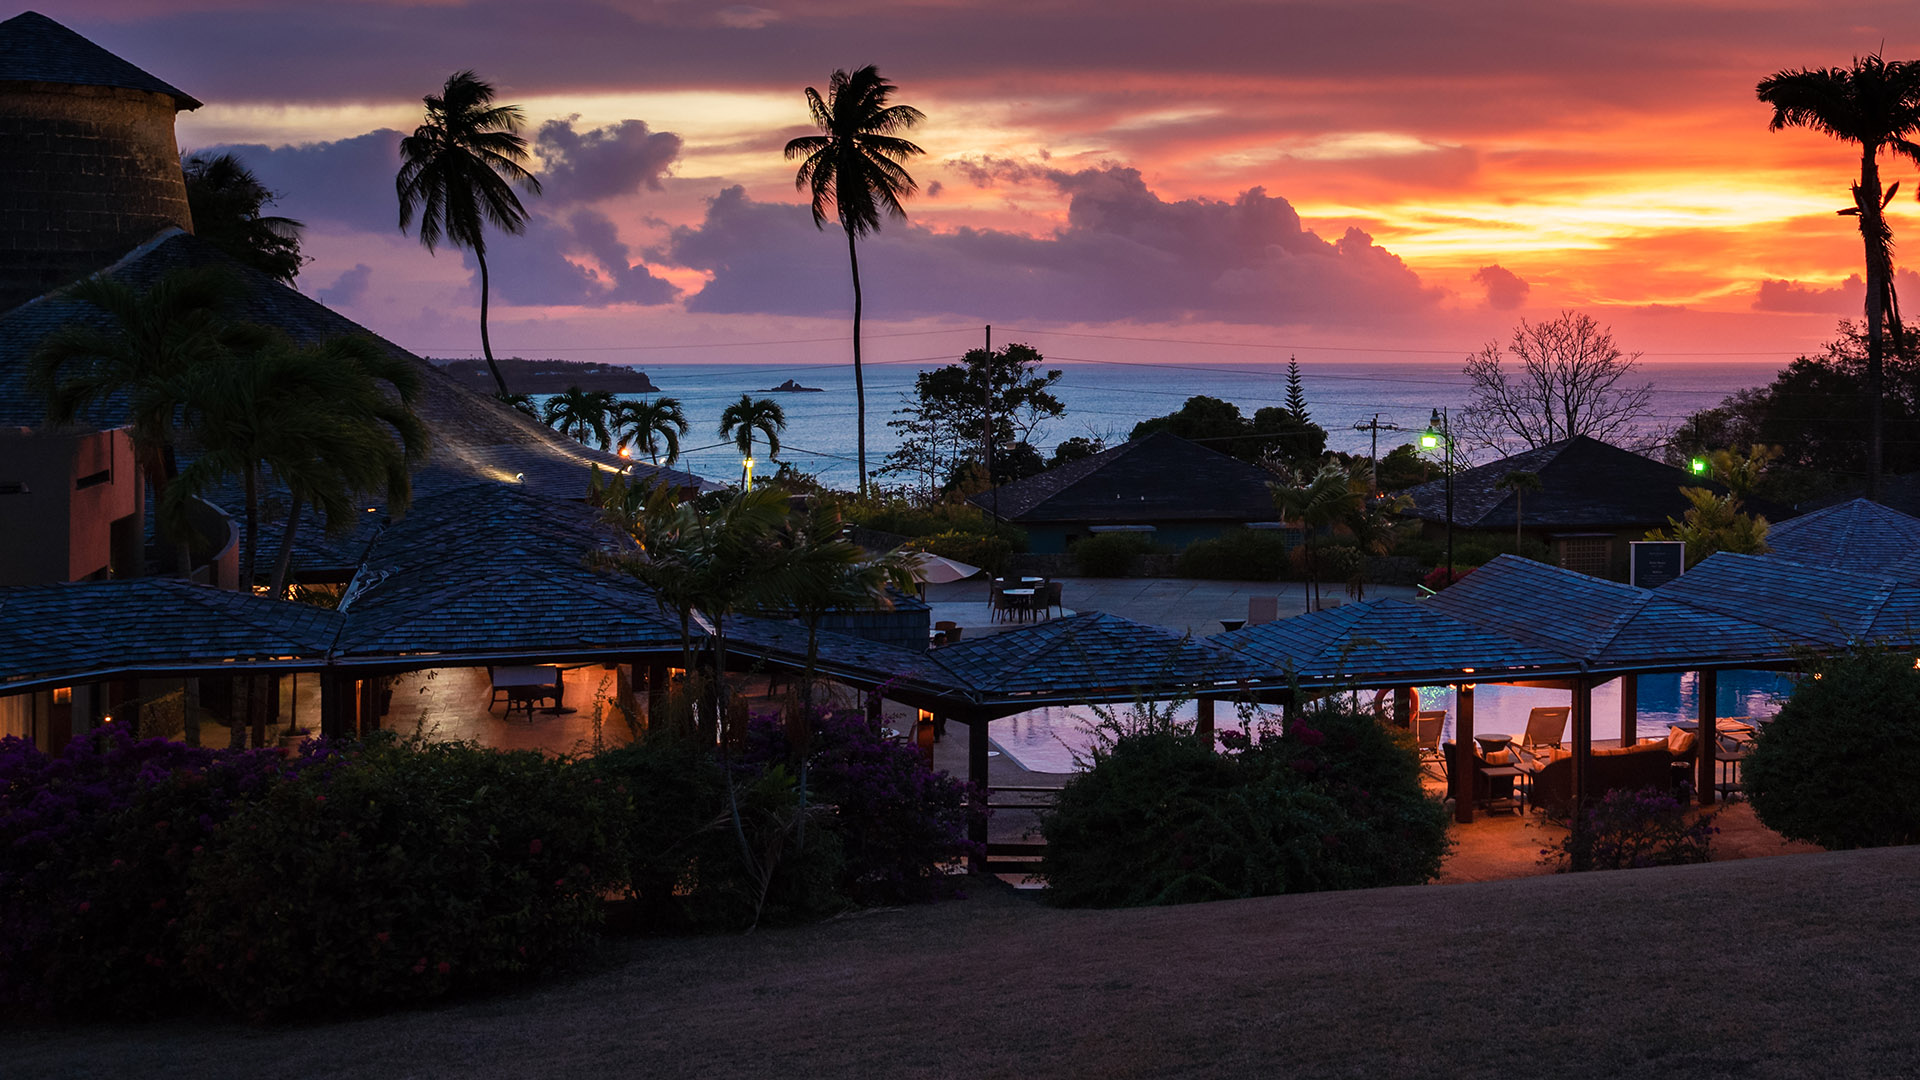 Beautiful peaceful sunset in Tobago Island